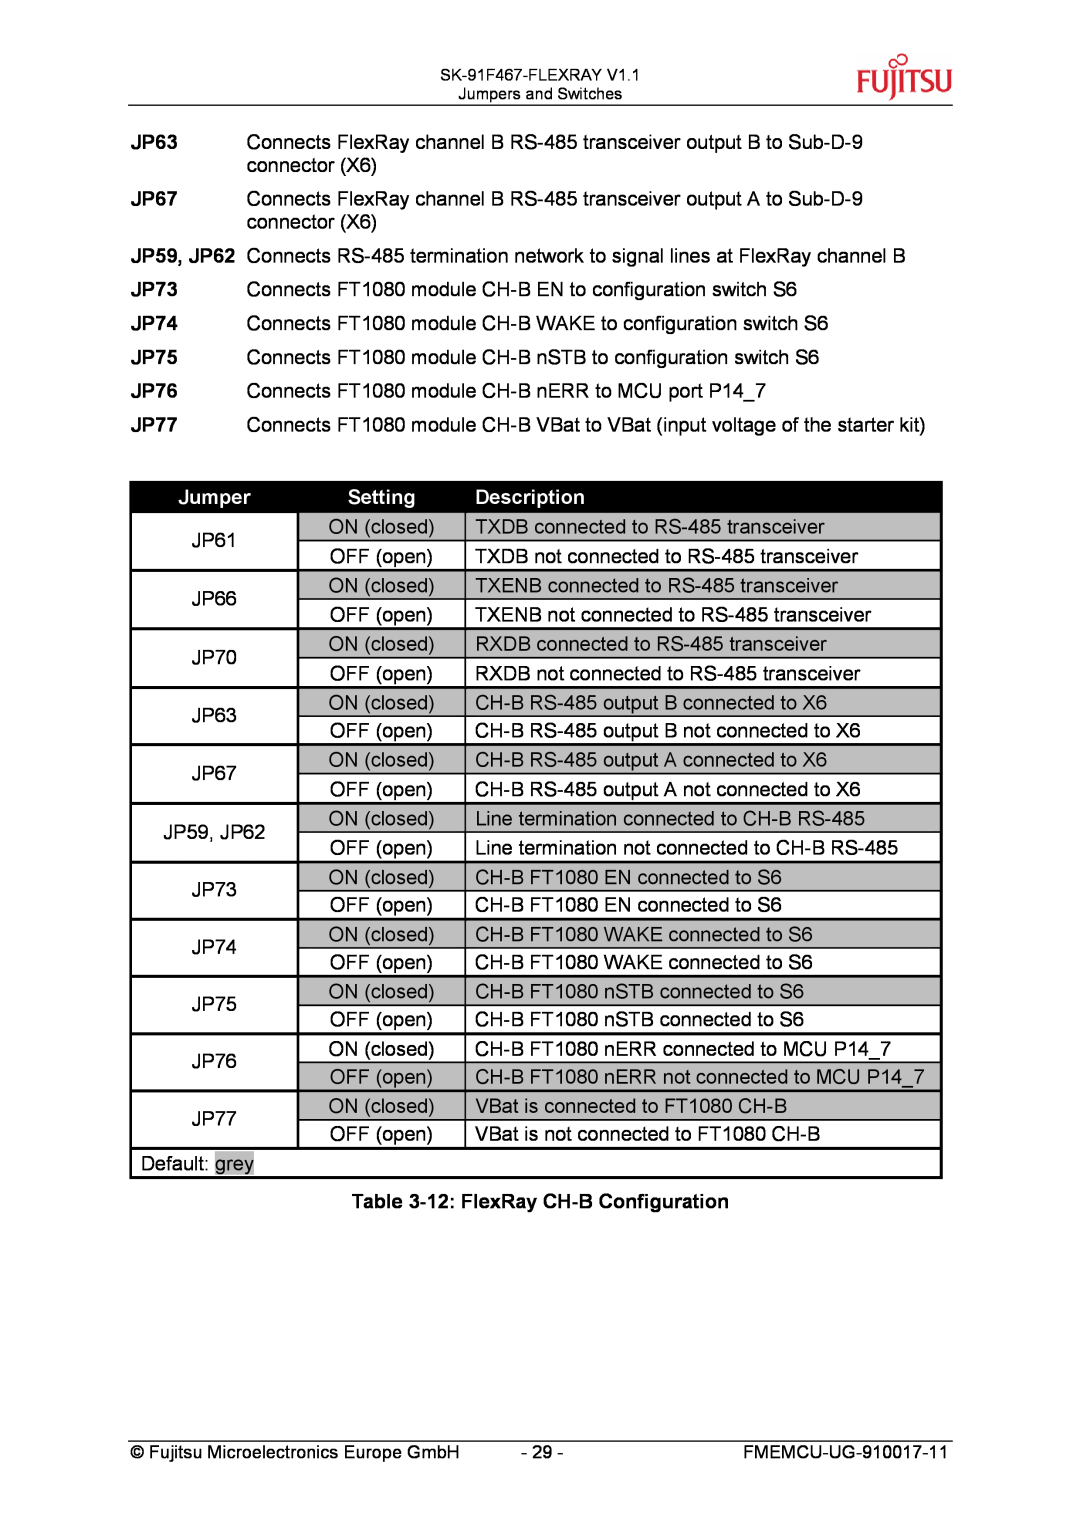 Fujitsu MB88121 SERIES, MB91460 SERIES manual 12 FlexRay CH-B Configuration, Jumper, Setting, Description 